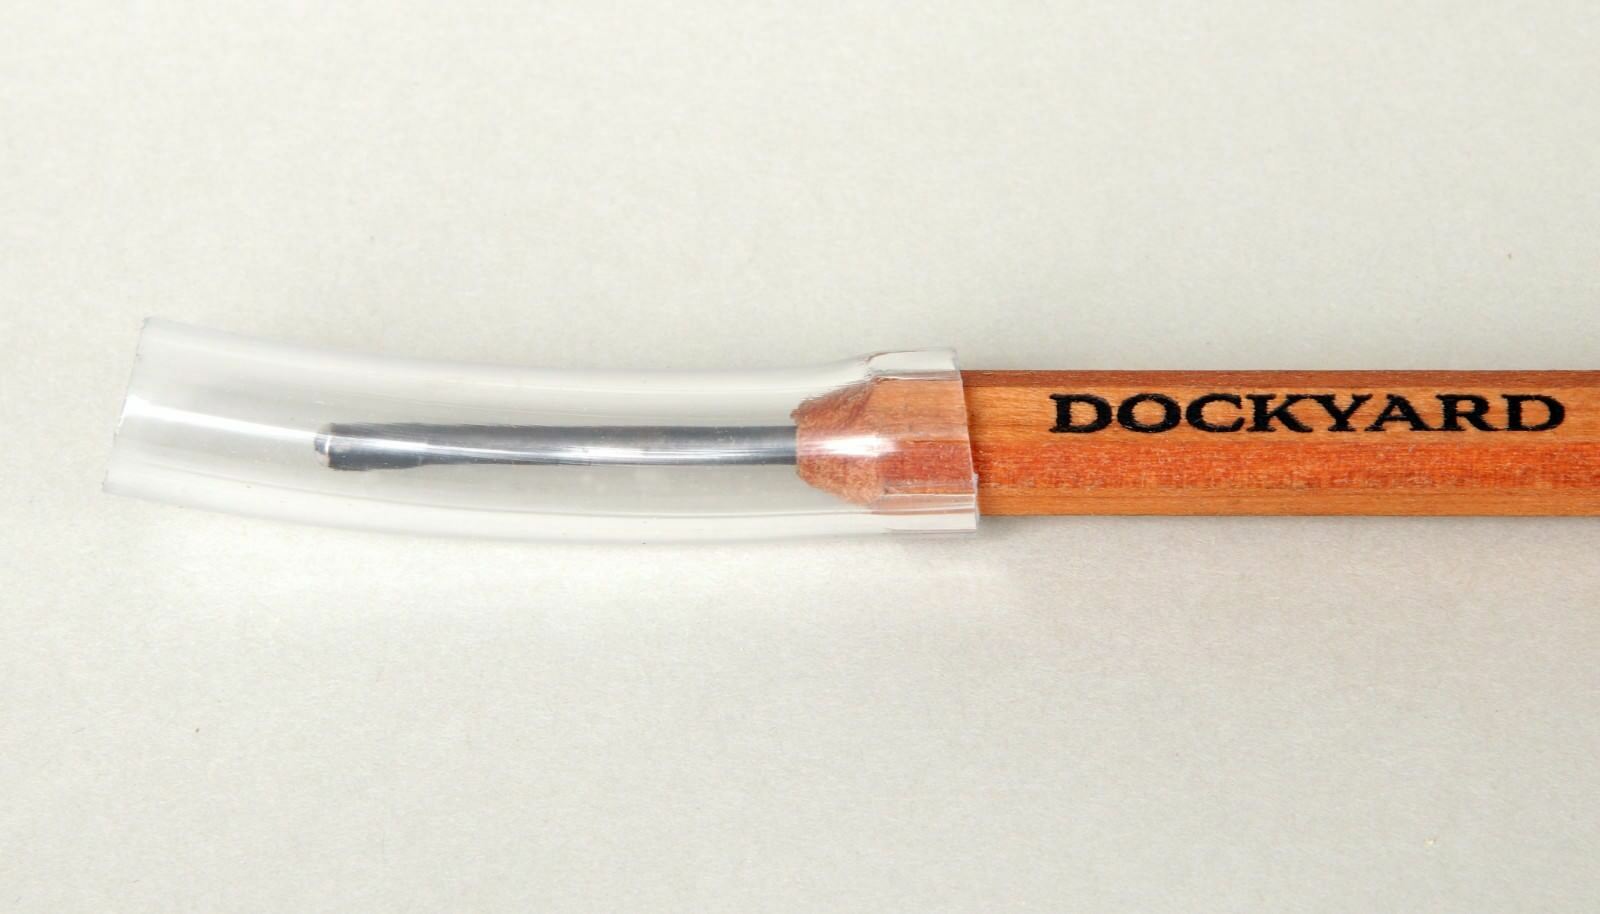 Dockyard Individual Micro Wood Carving Tools (gouges, V-tools, & Skews)